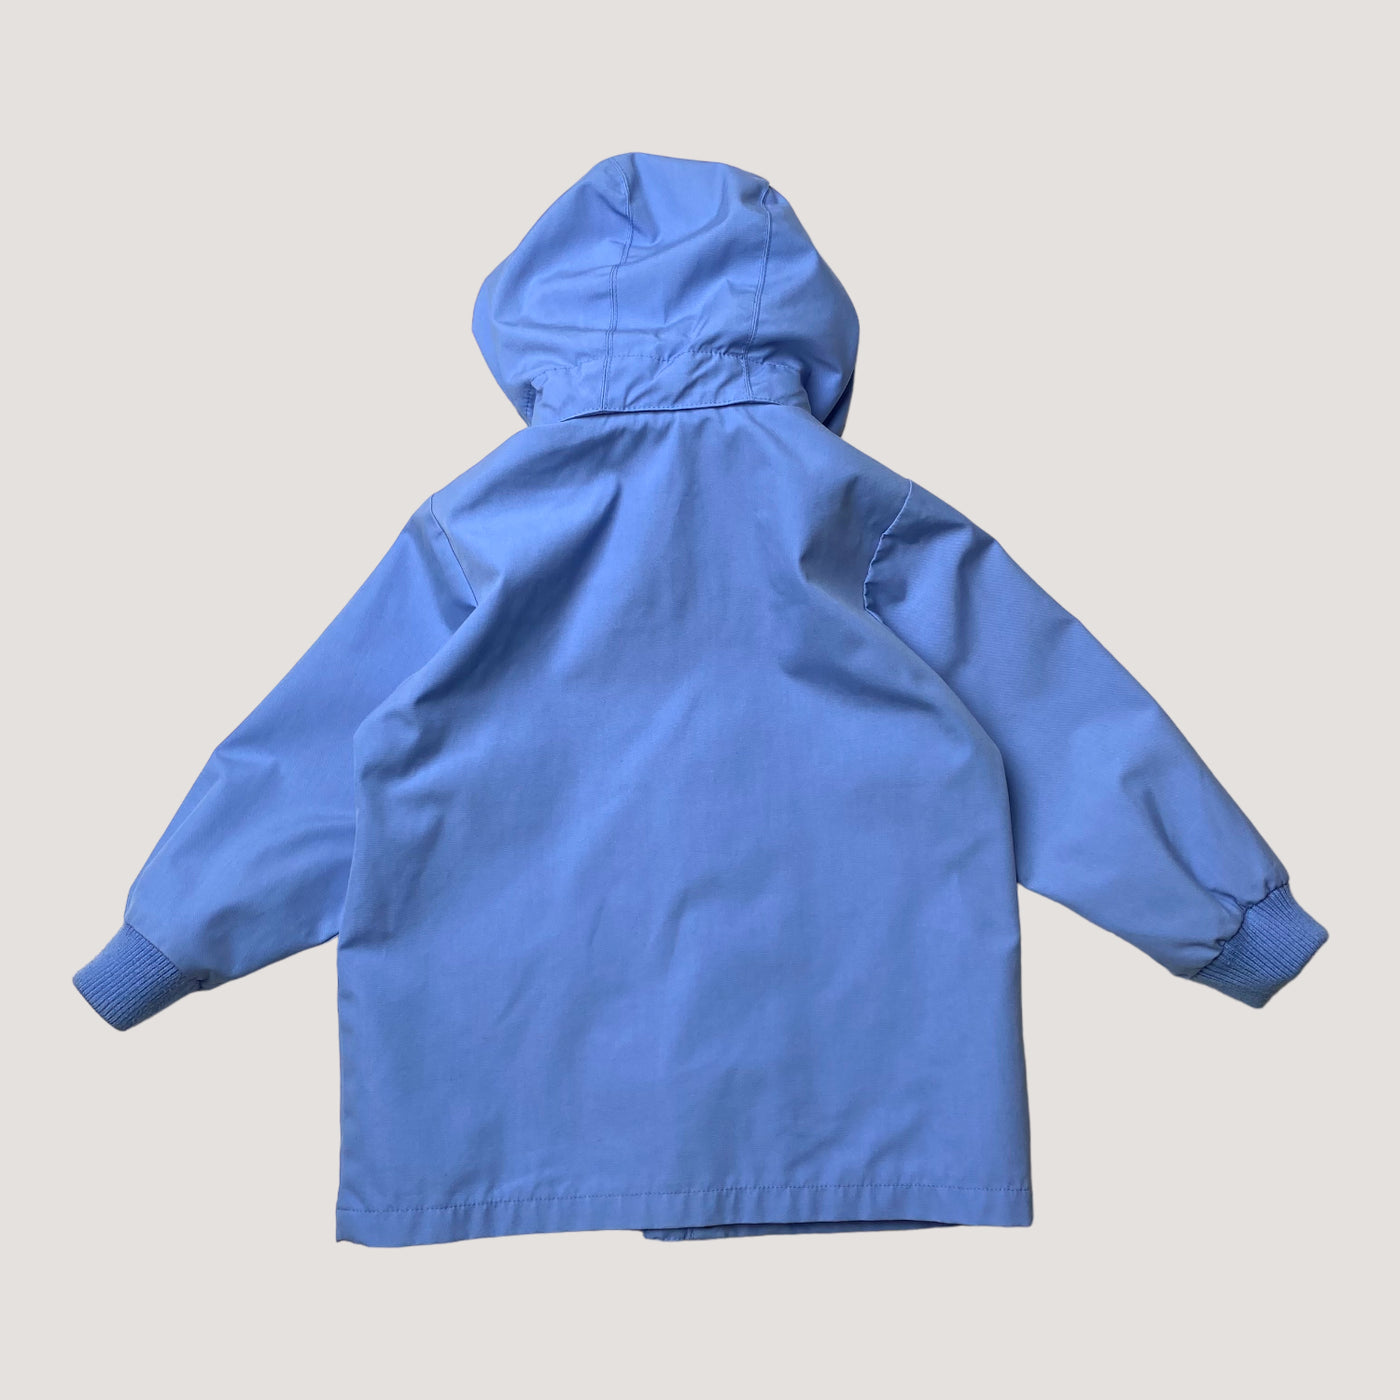 Mini Rodini pico jacket, baby blue | 92/98cm